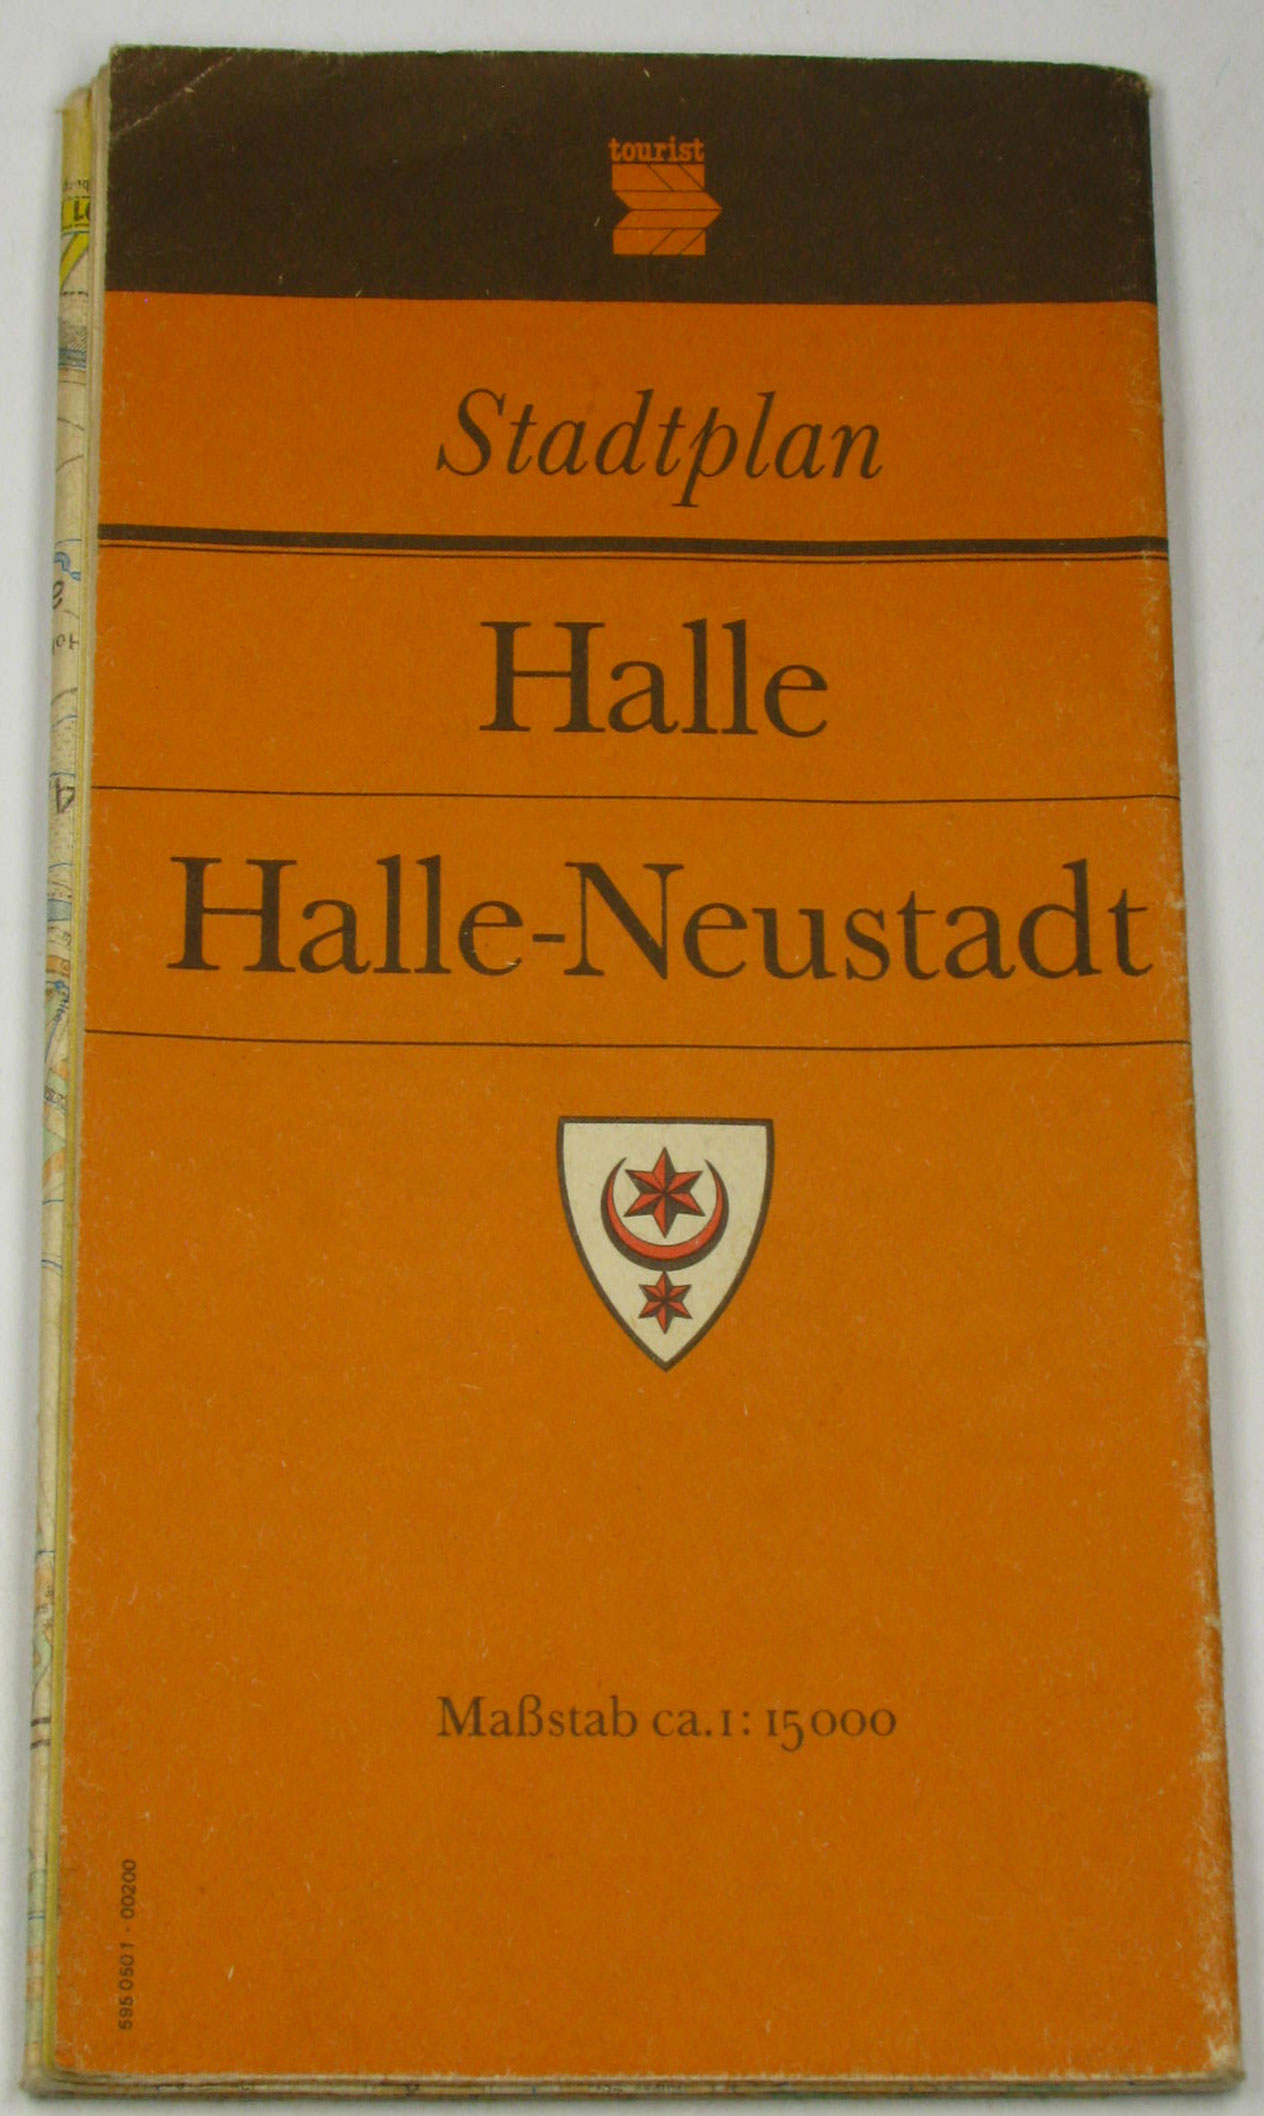   Stadtplan Halle / Halle-Neustadt 